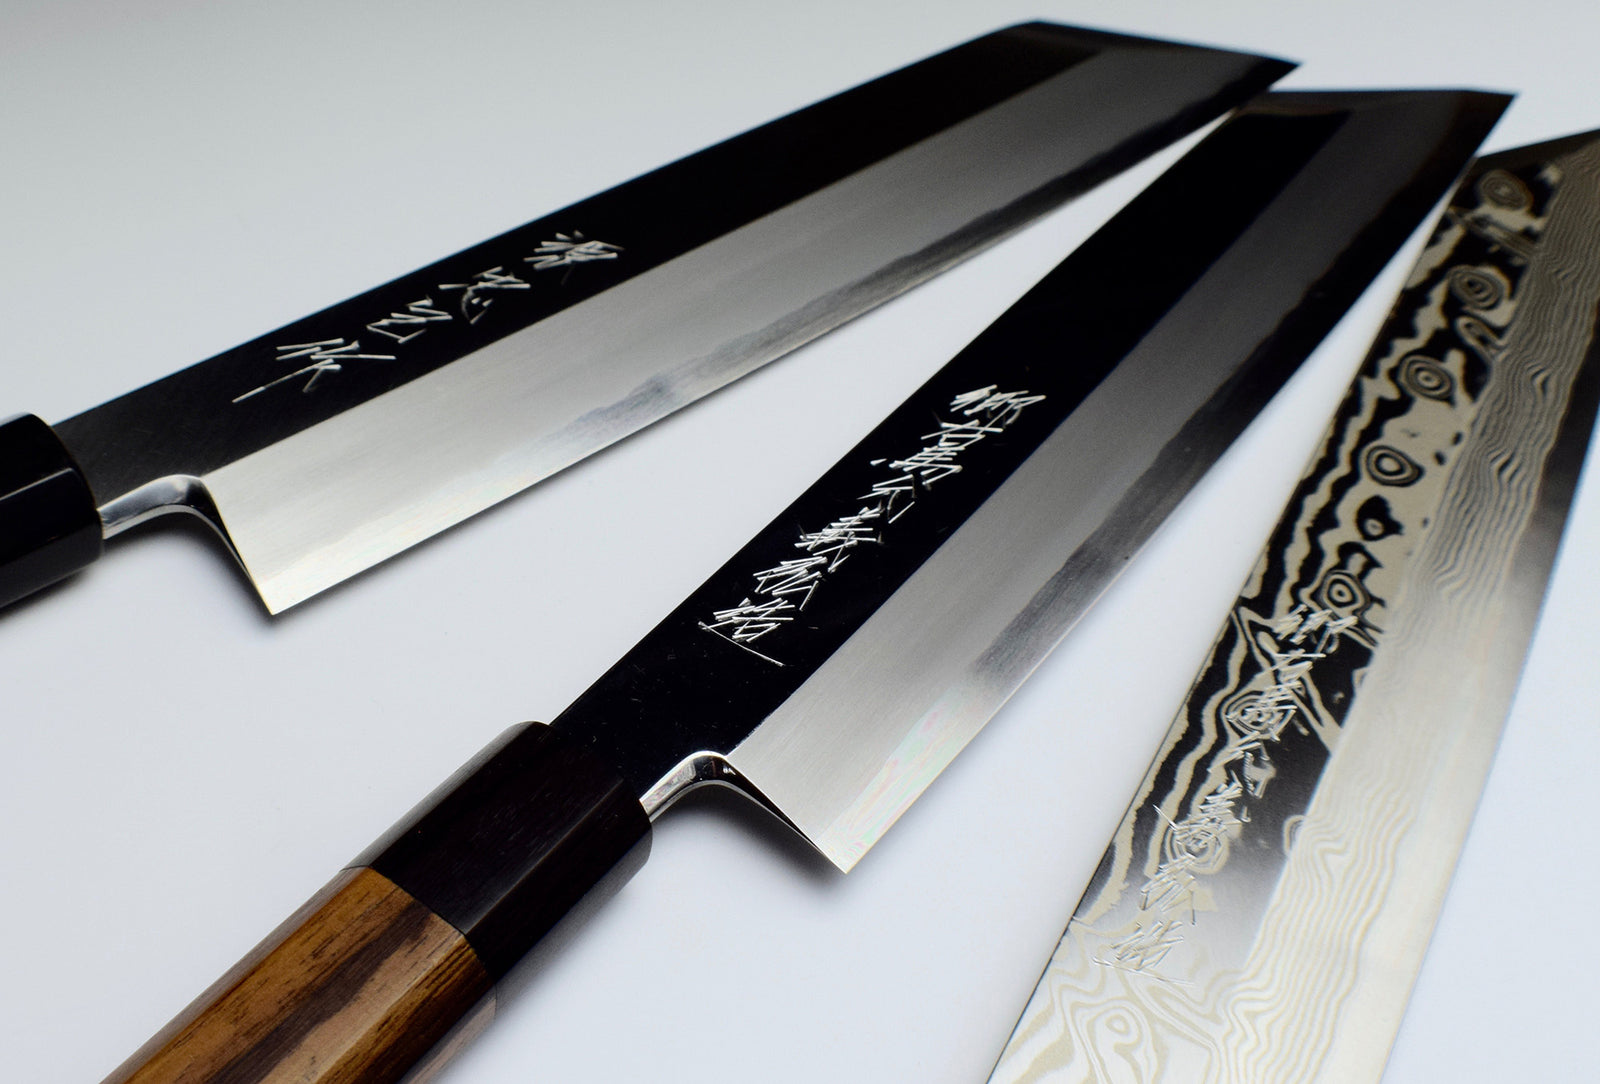 Japanese-made kitchen knives